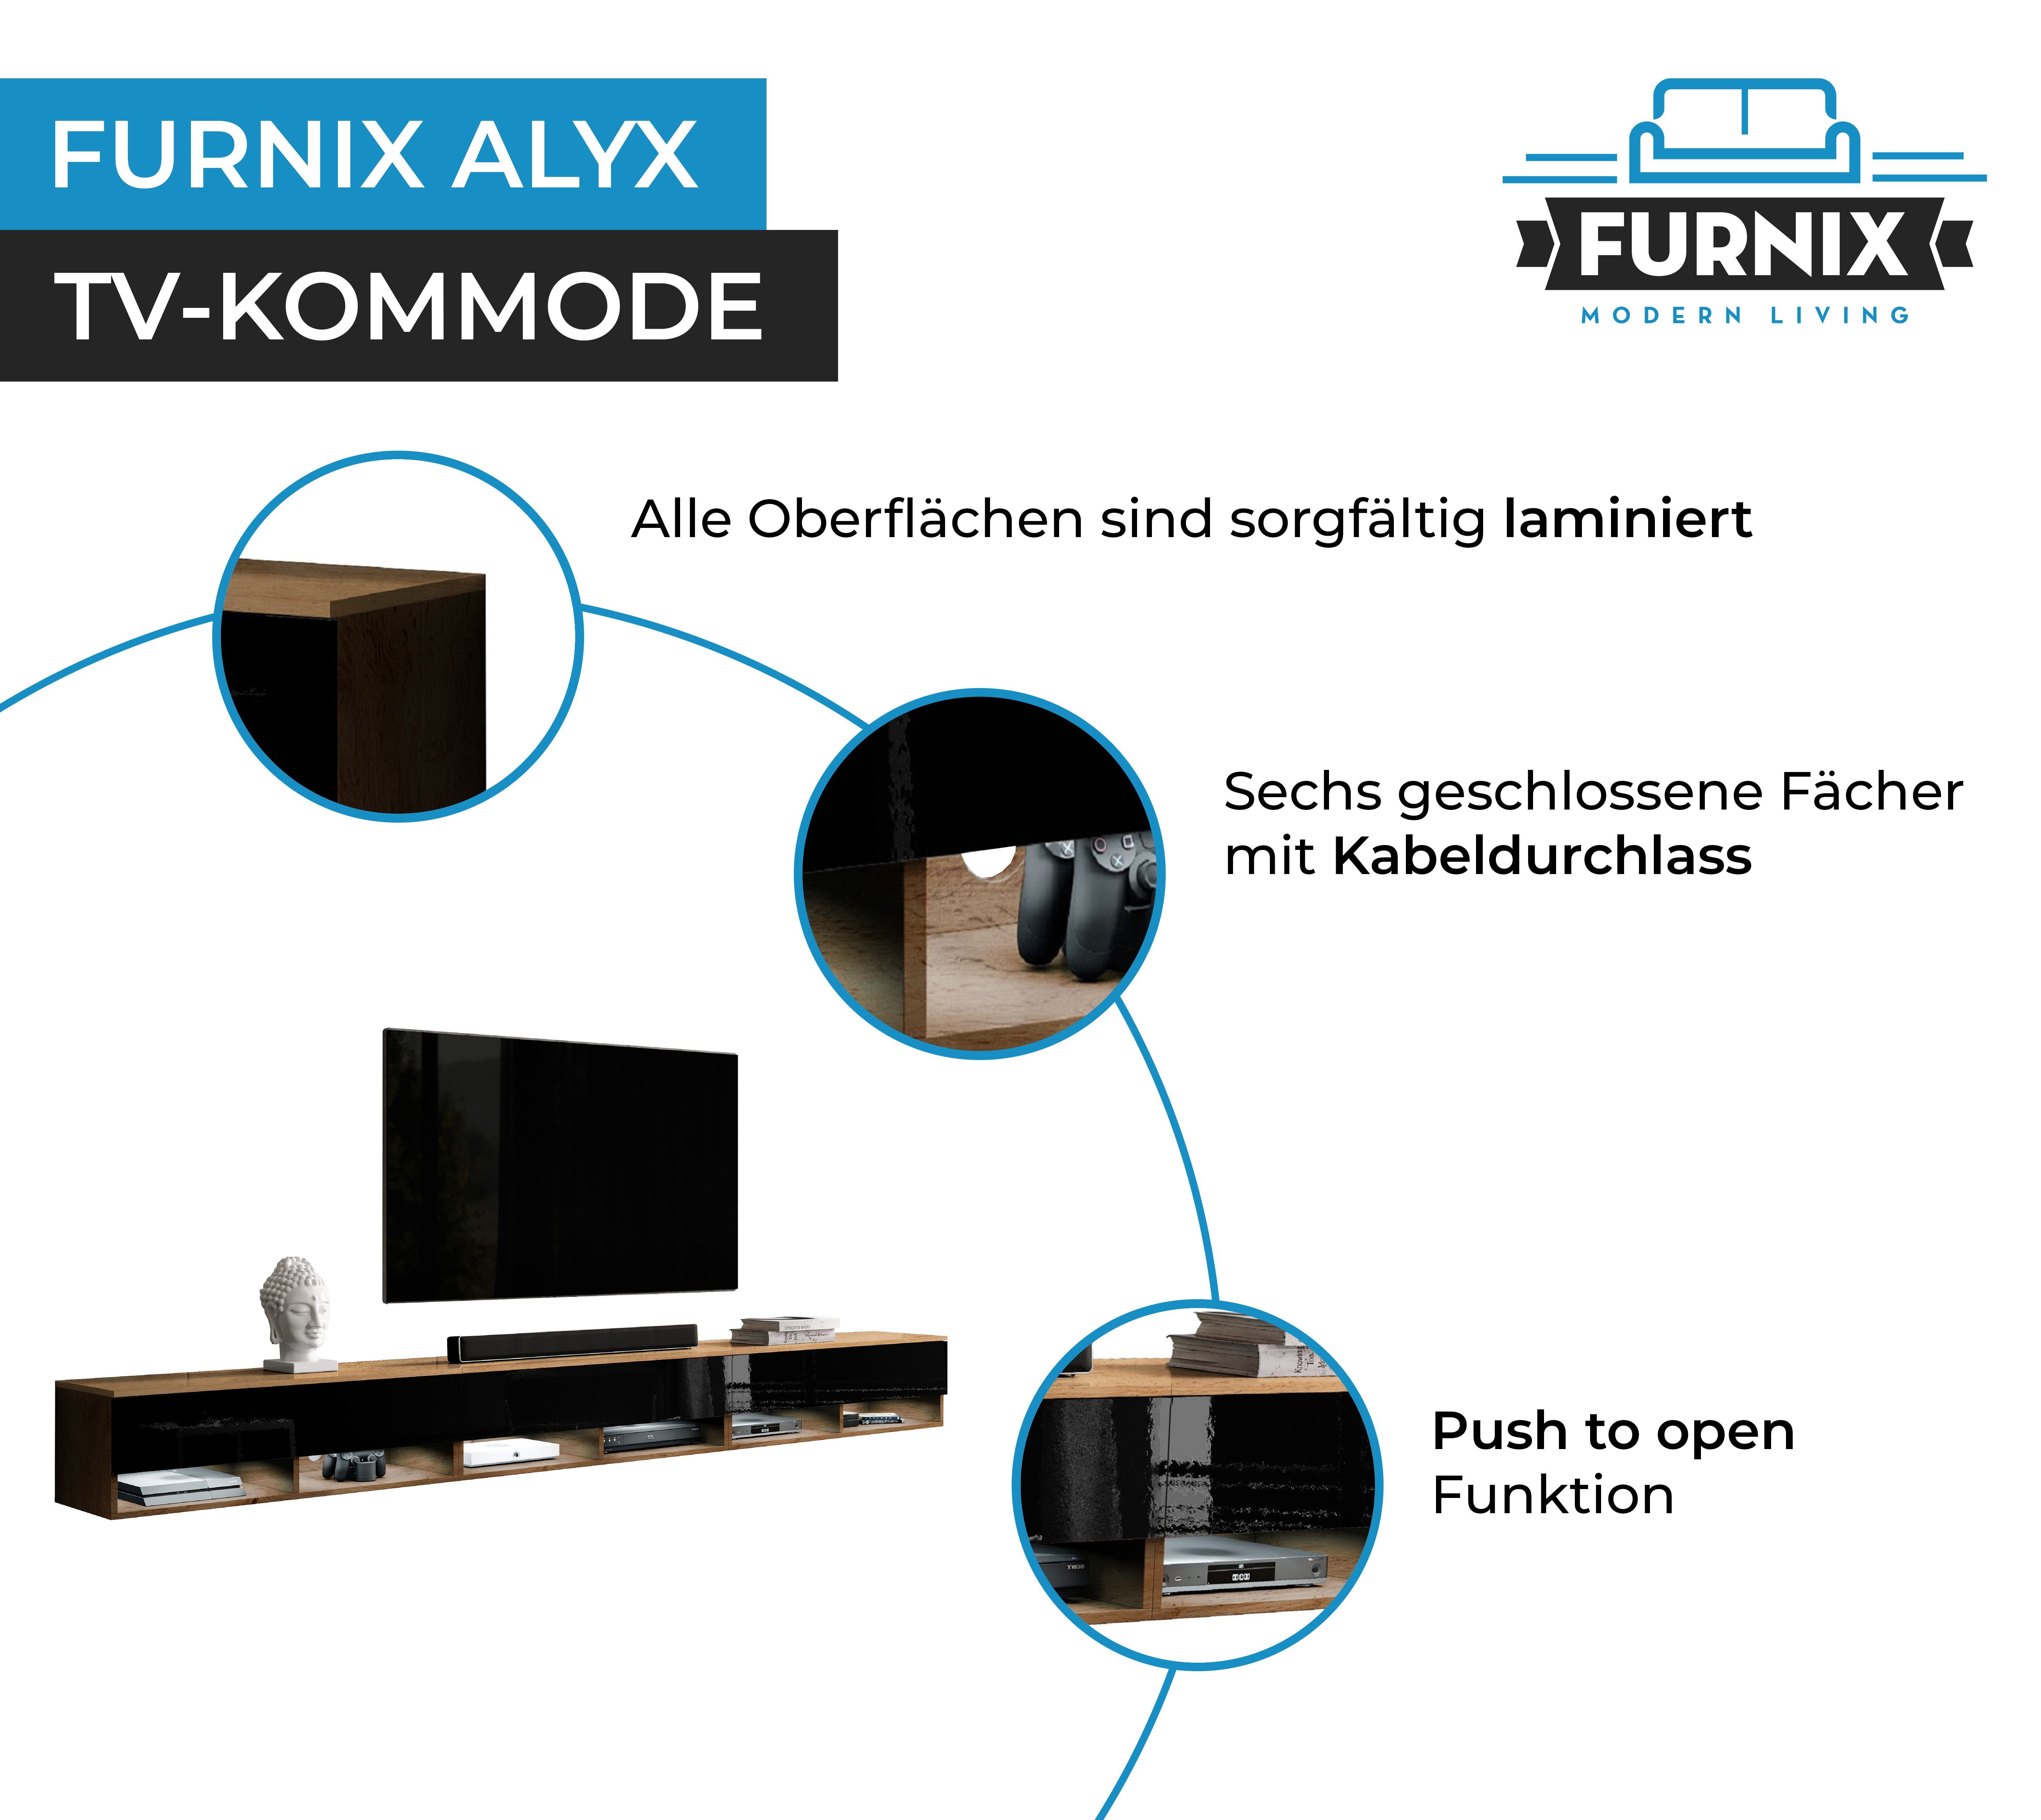 TV-Schrank TV-Kommode Lowboard Glanz x cm ALYX LED 3 H34 Wotan/Schwarz B300 x mit ohne Furnix T32 cm Türen 300